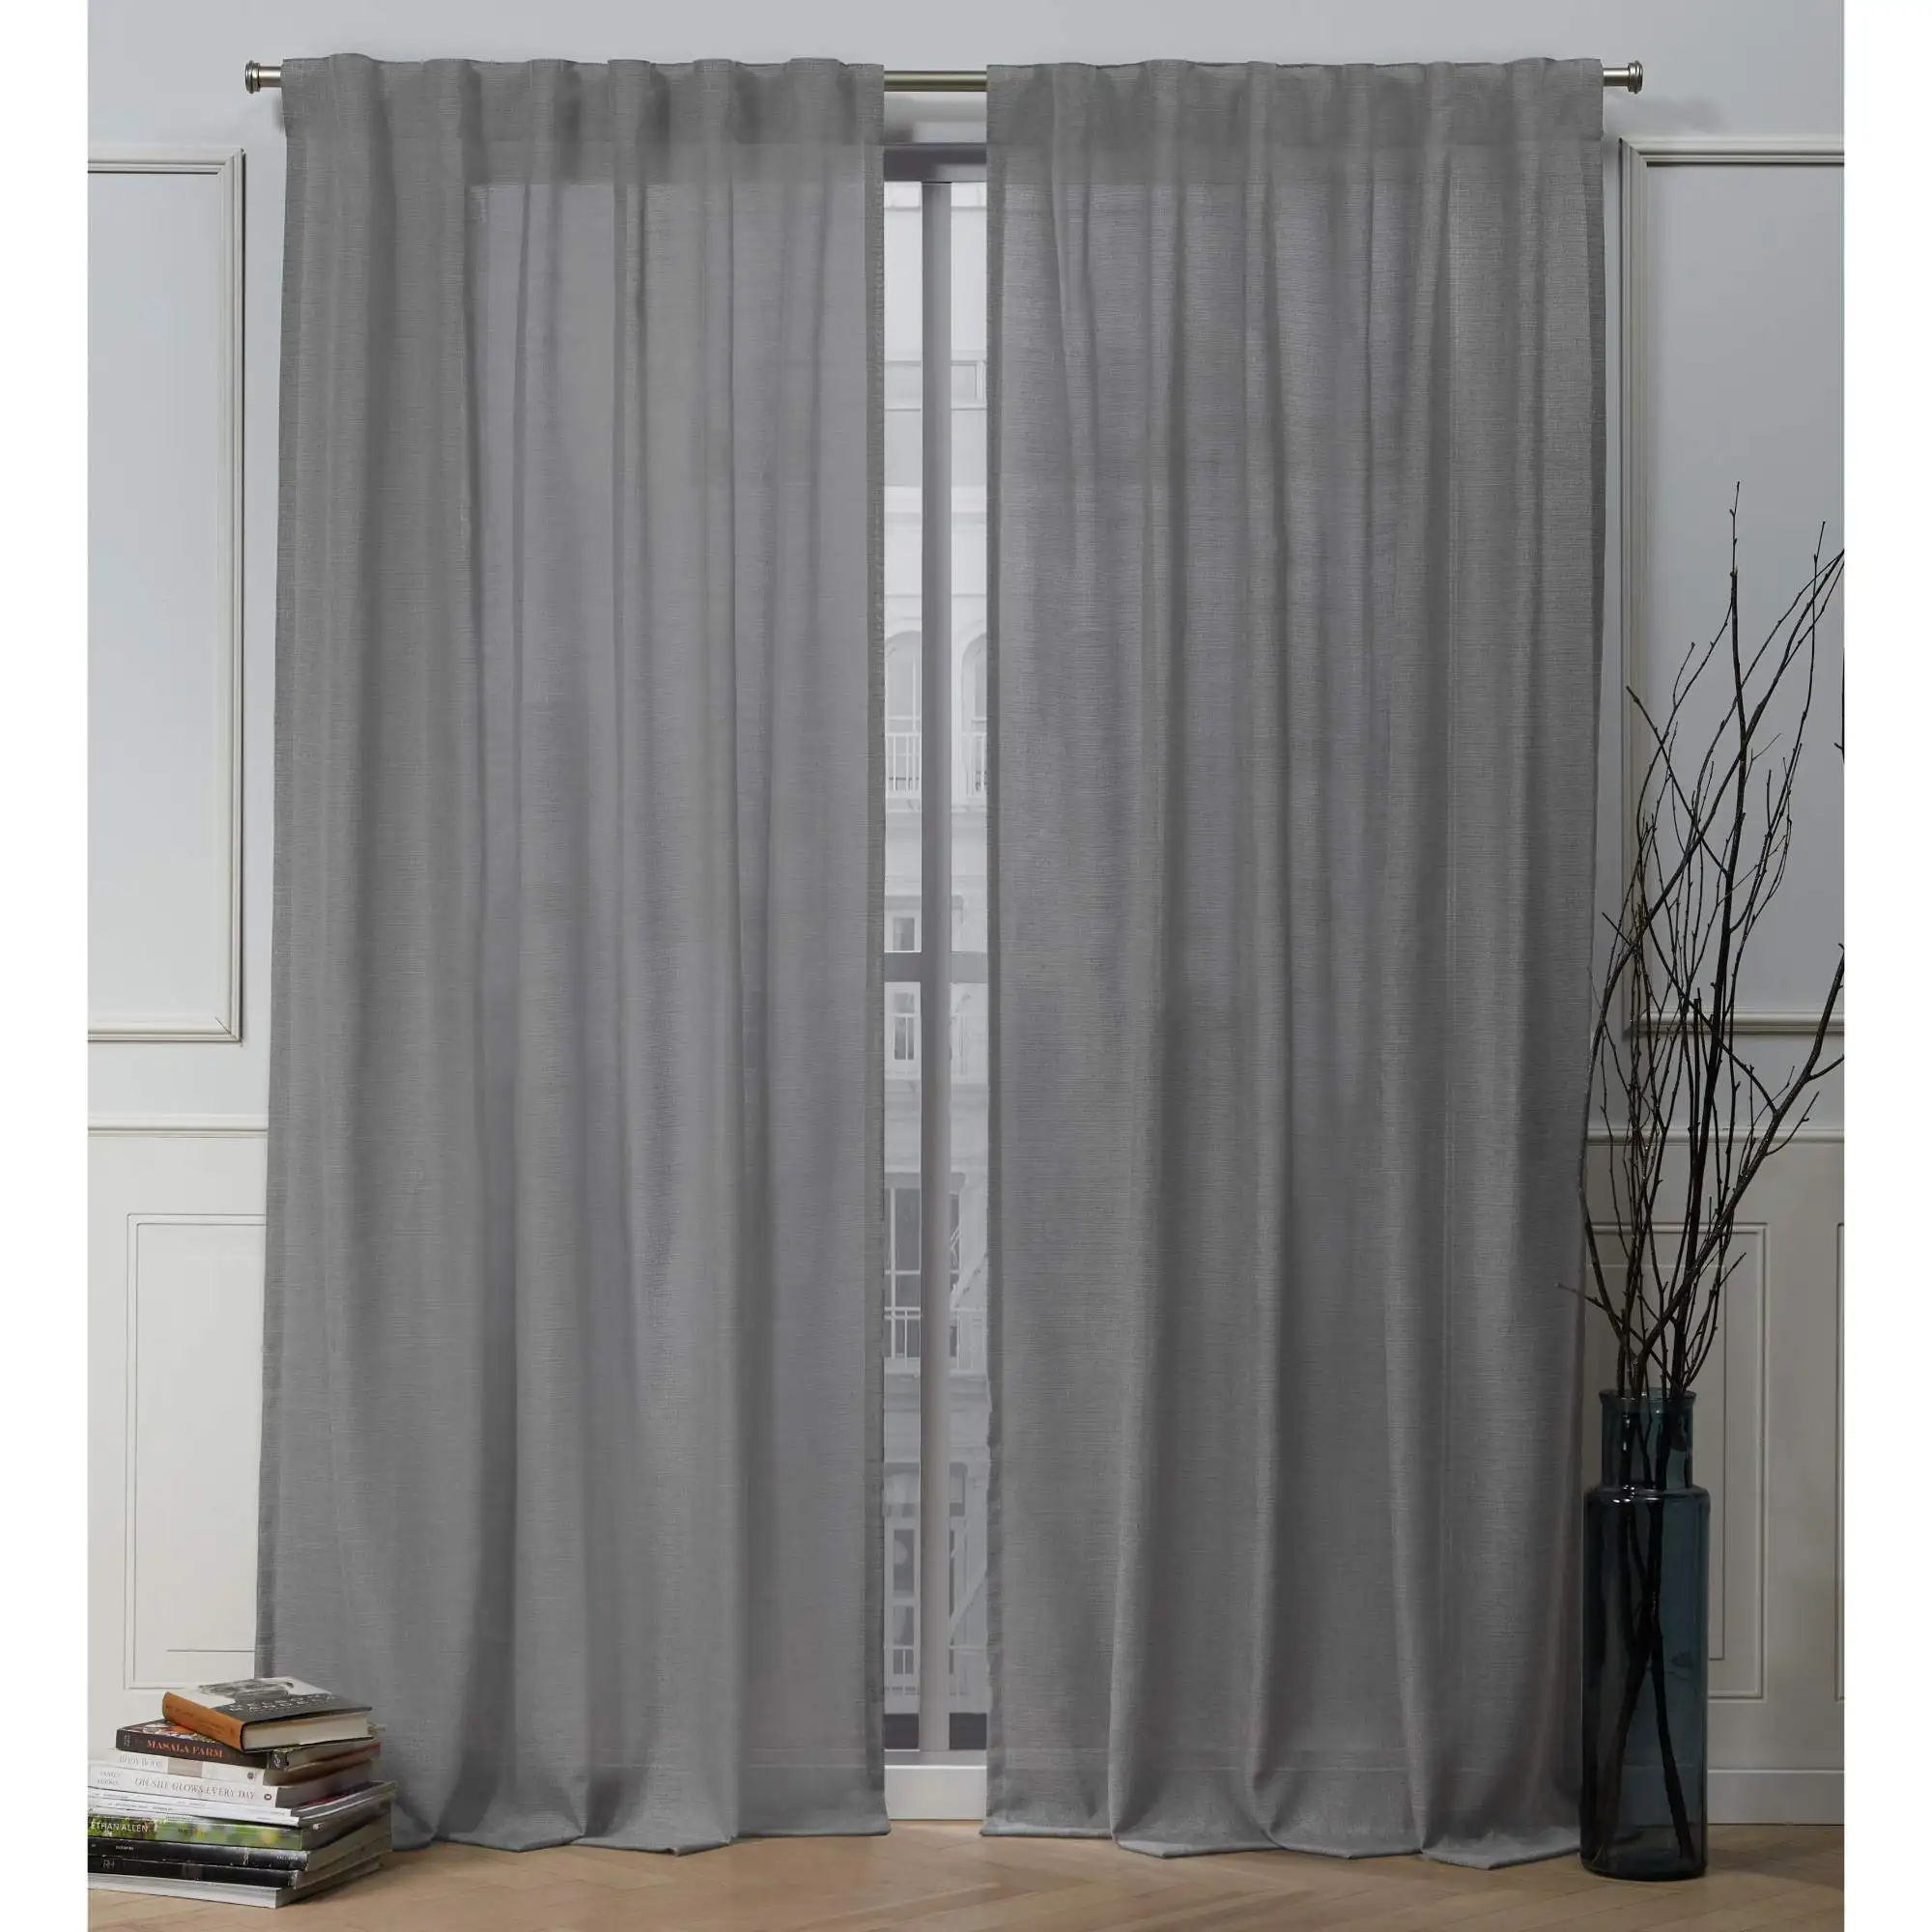 

Faux Linen Slub Textured Hidden Tab Top Curtain Panel Pair, 54x84, Black Pearl